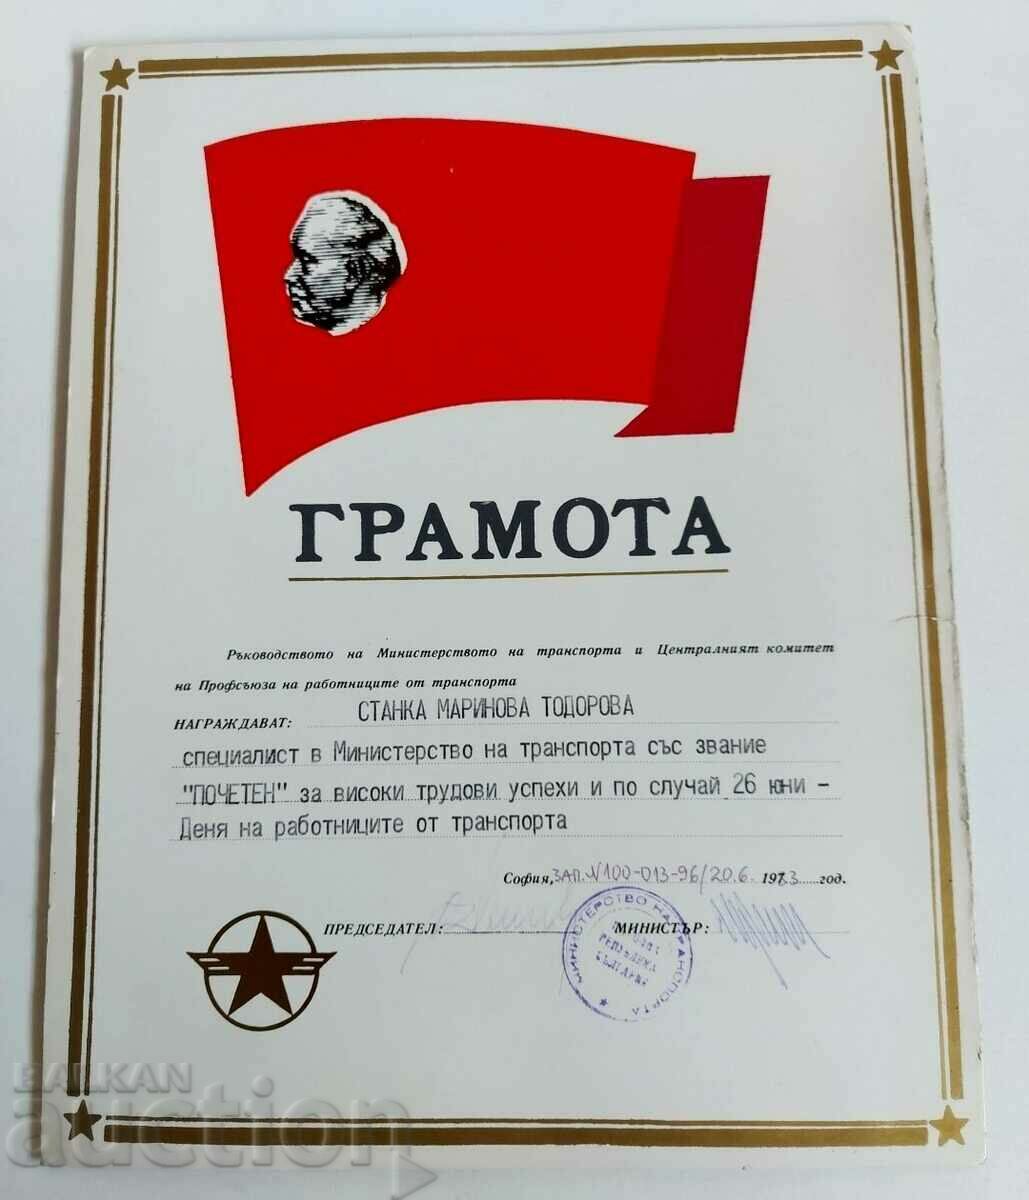 1983 GRAMOTA SOCA ΥΠΟΥΡΓΕΙΟ Μεταφορών ΒΚΠ